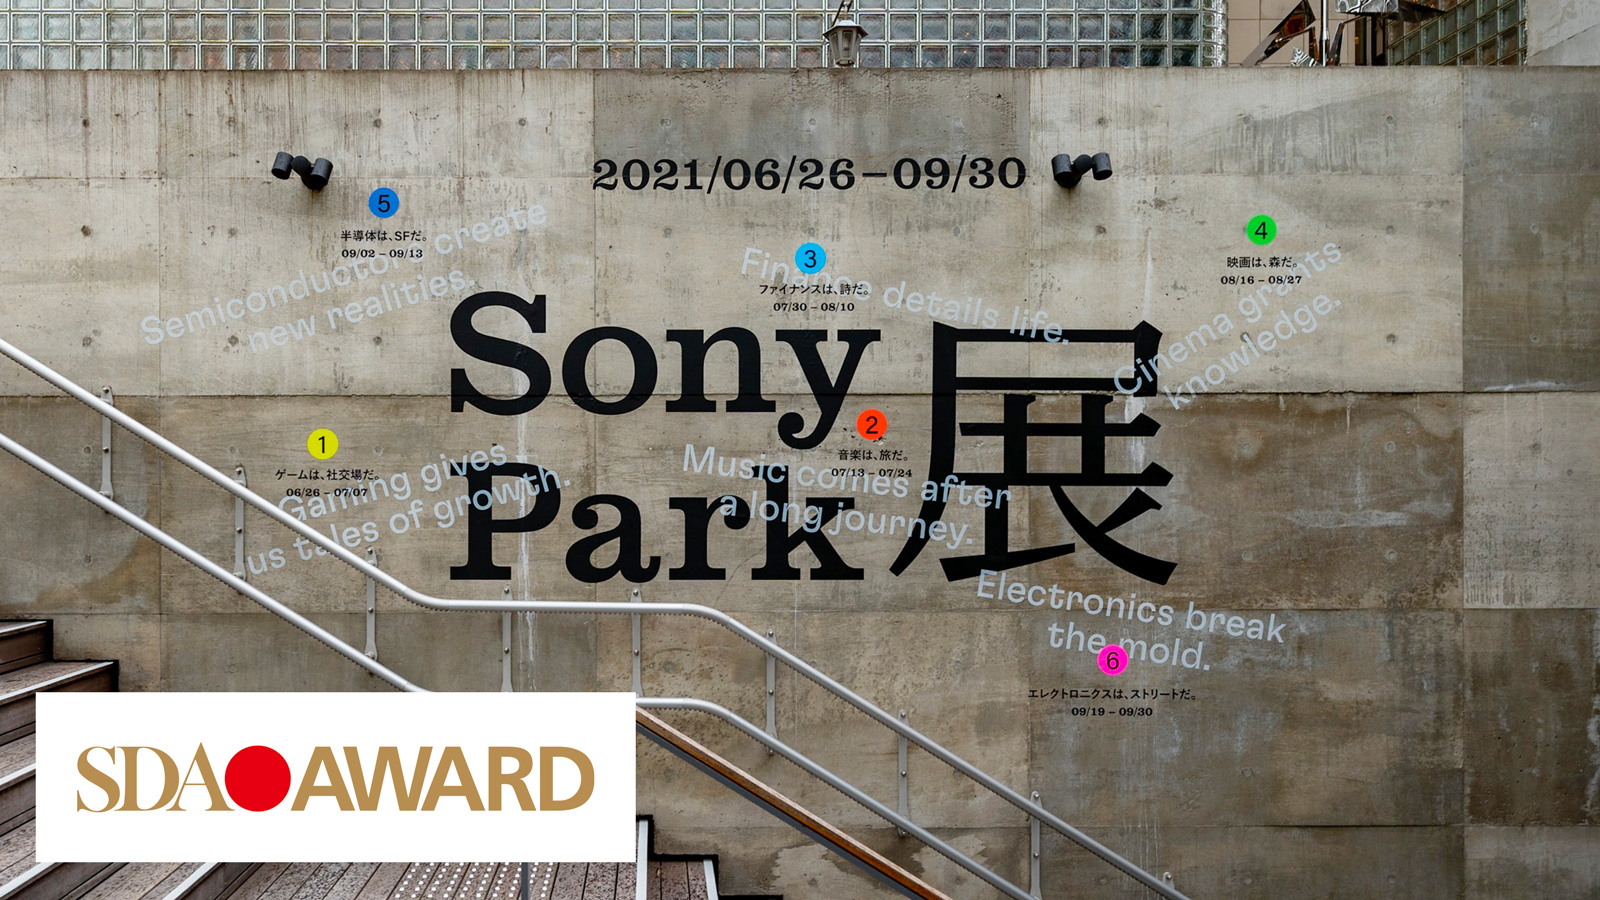 “Sony Park Exhibition”announcement visual,